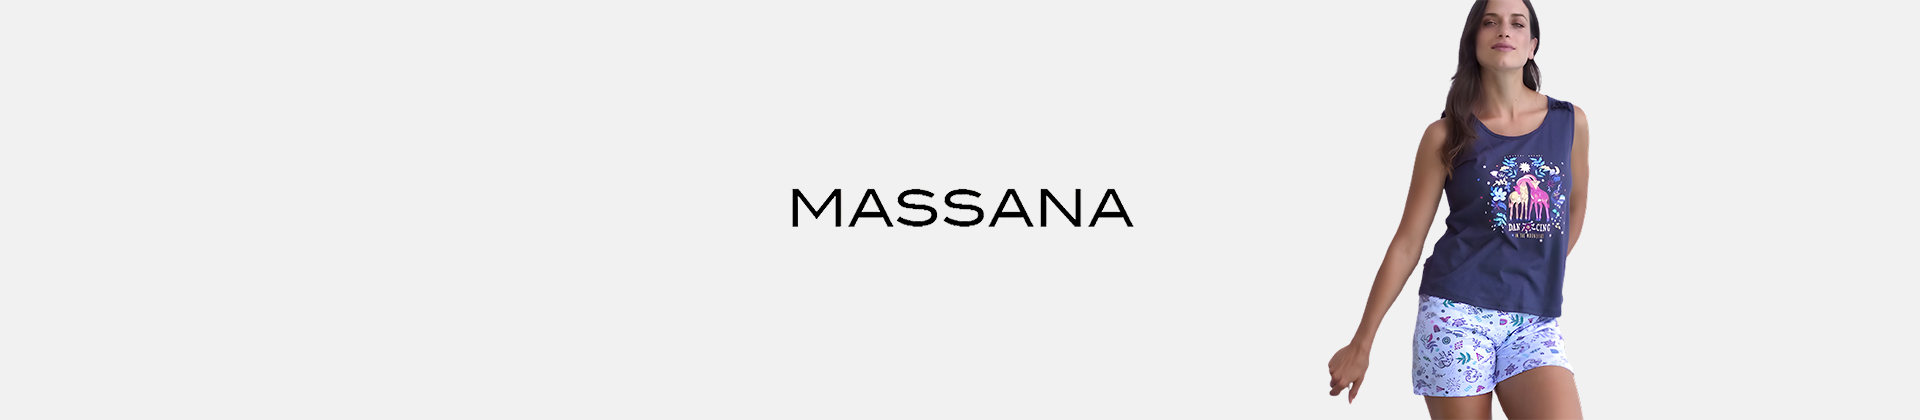 Massana pajamas designer Online